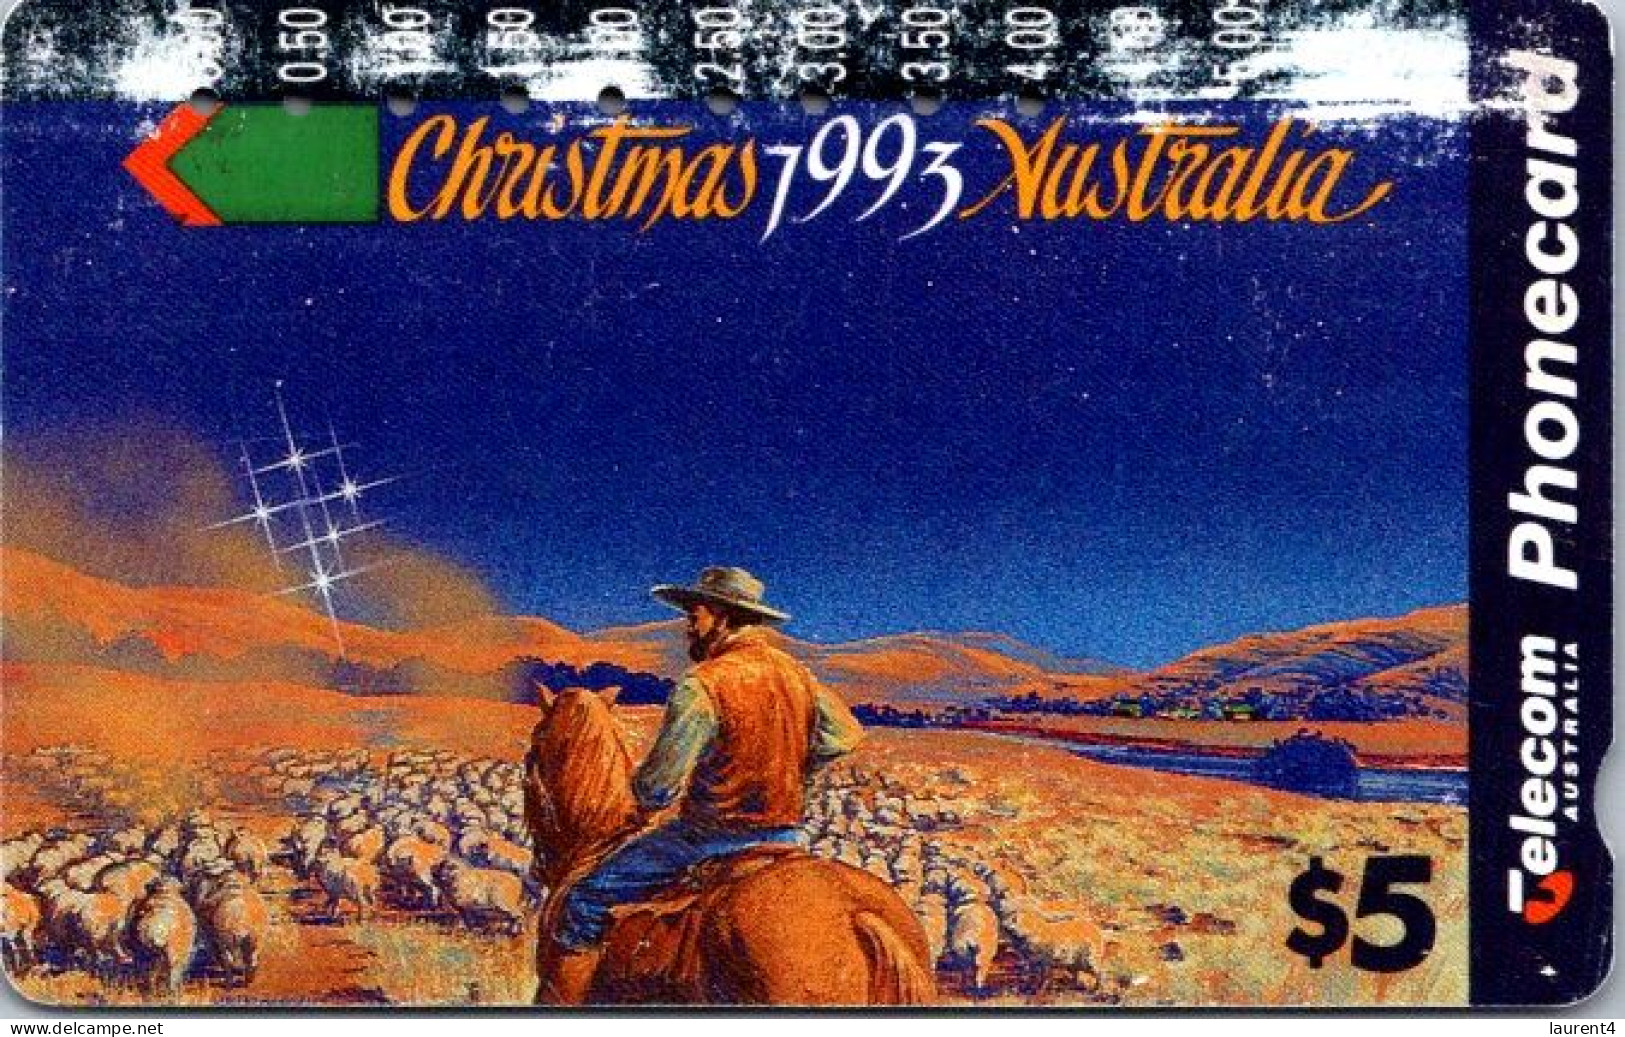 9-3-2024 (Phonecard) Christmas 1993 - $ 5.00 + 10.00 Phonecard - Carte De Téléphoone (2 Cards) - Australie